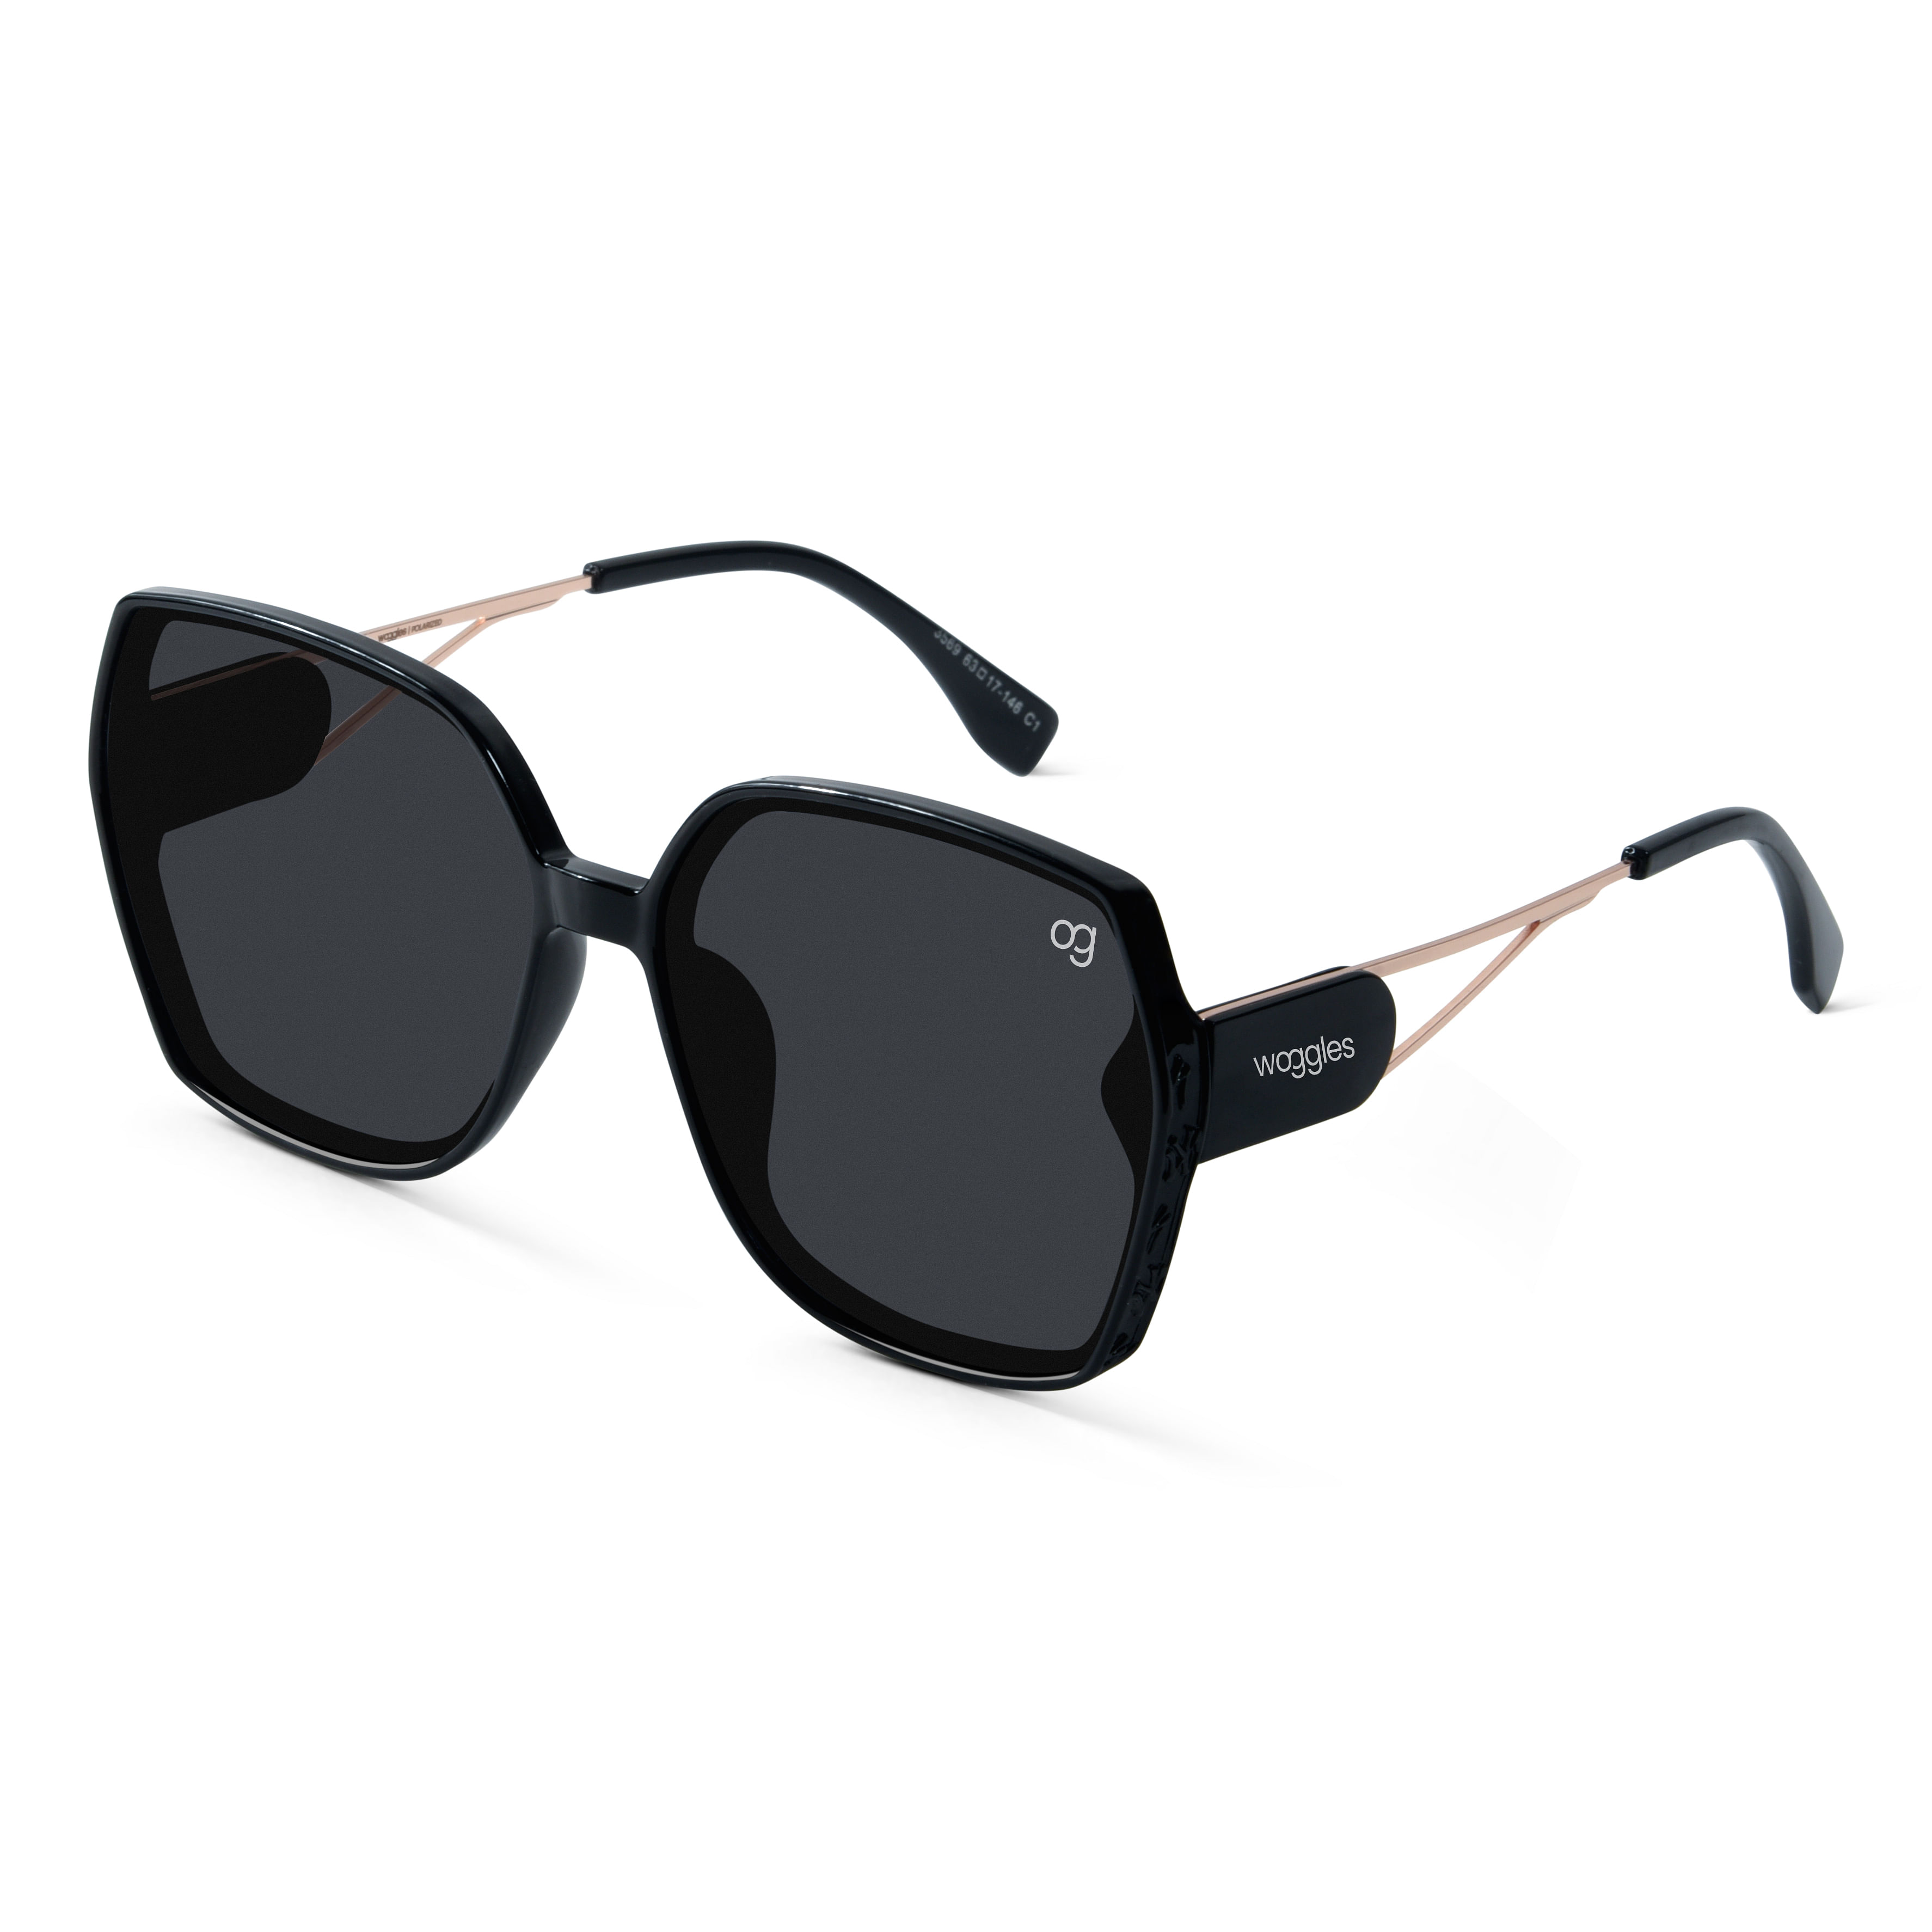 Stylish & Affordable Sunglasses on Sale – V-MIRRORED – Quay Australia